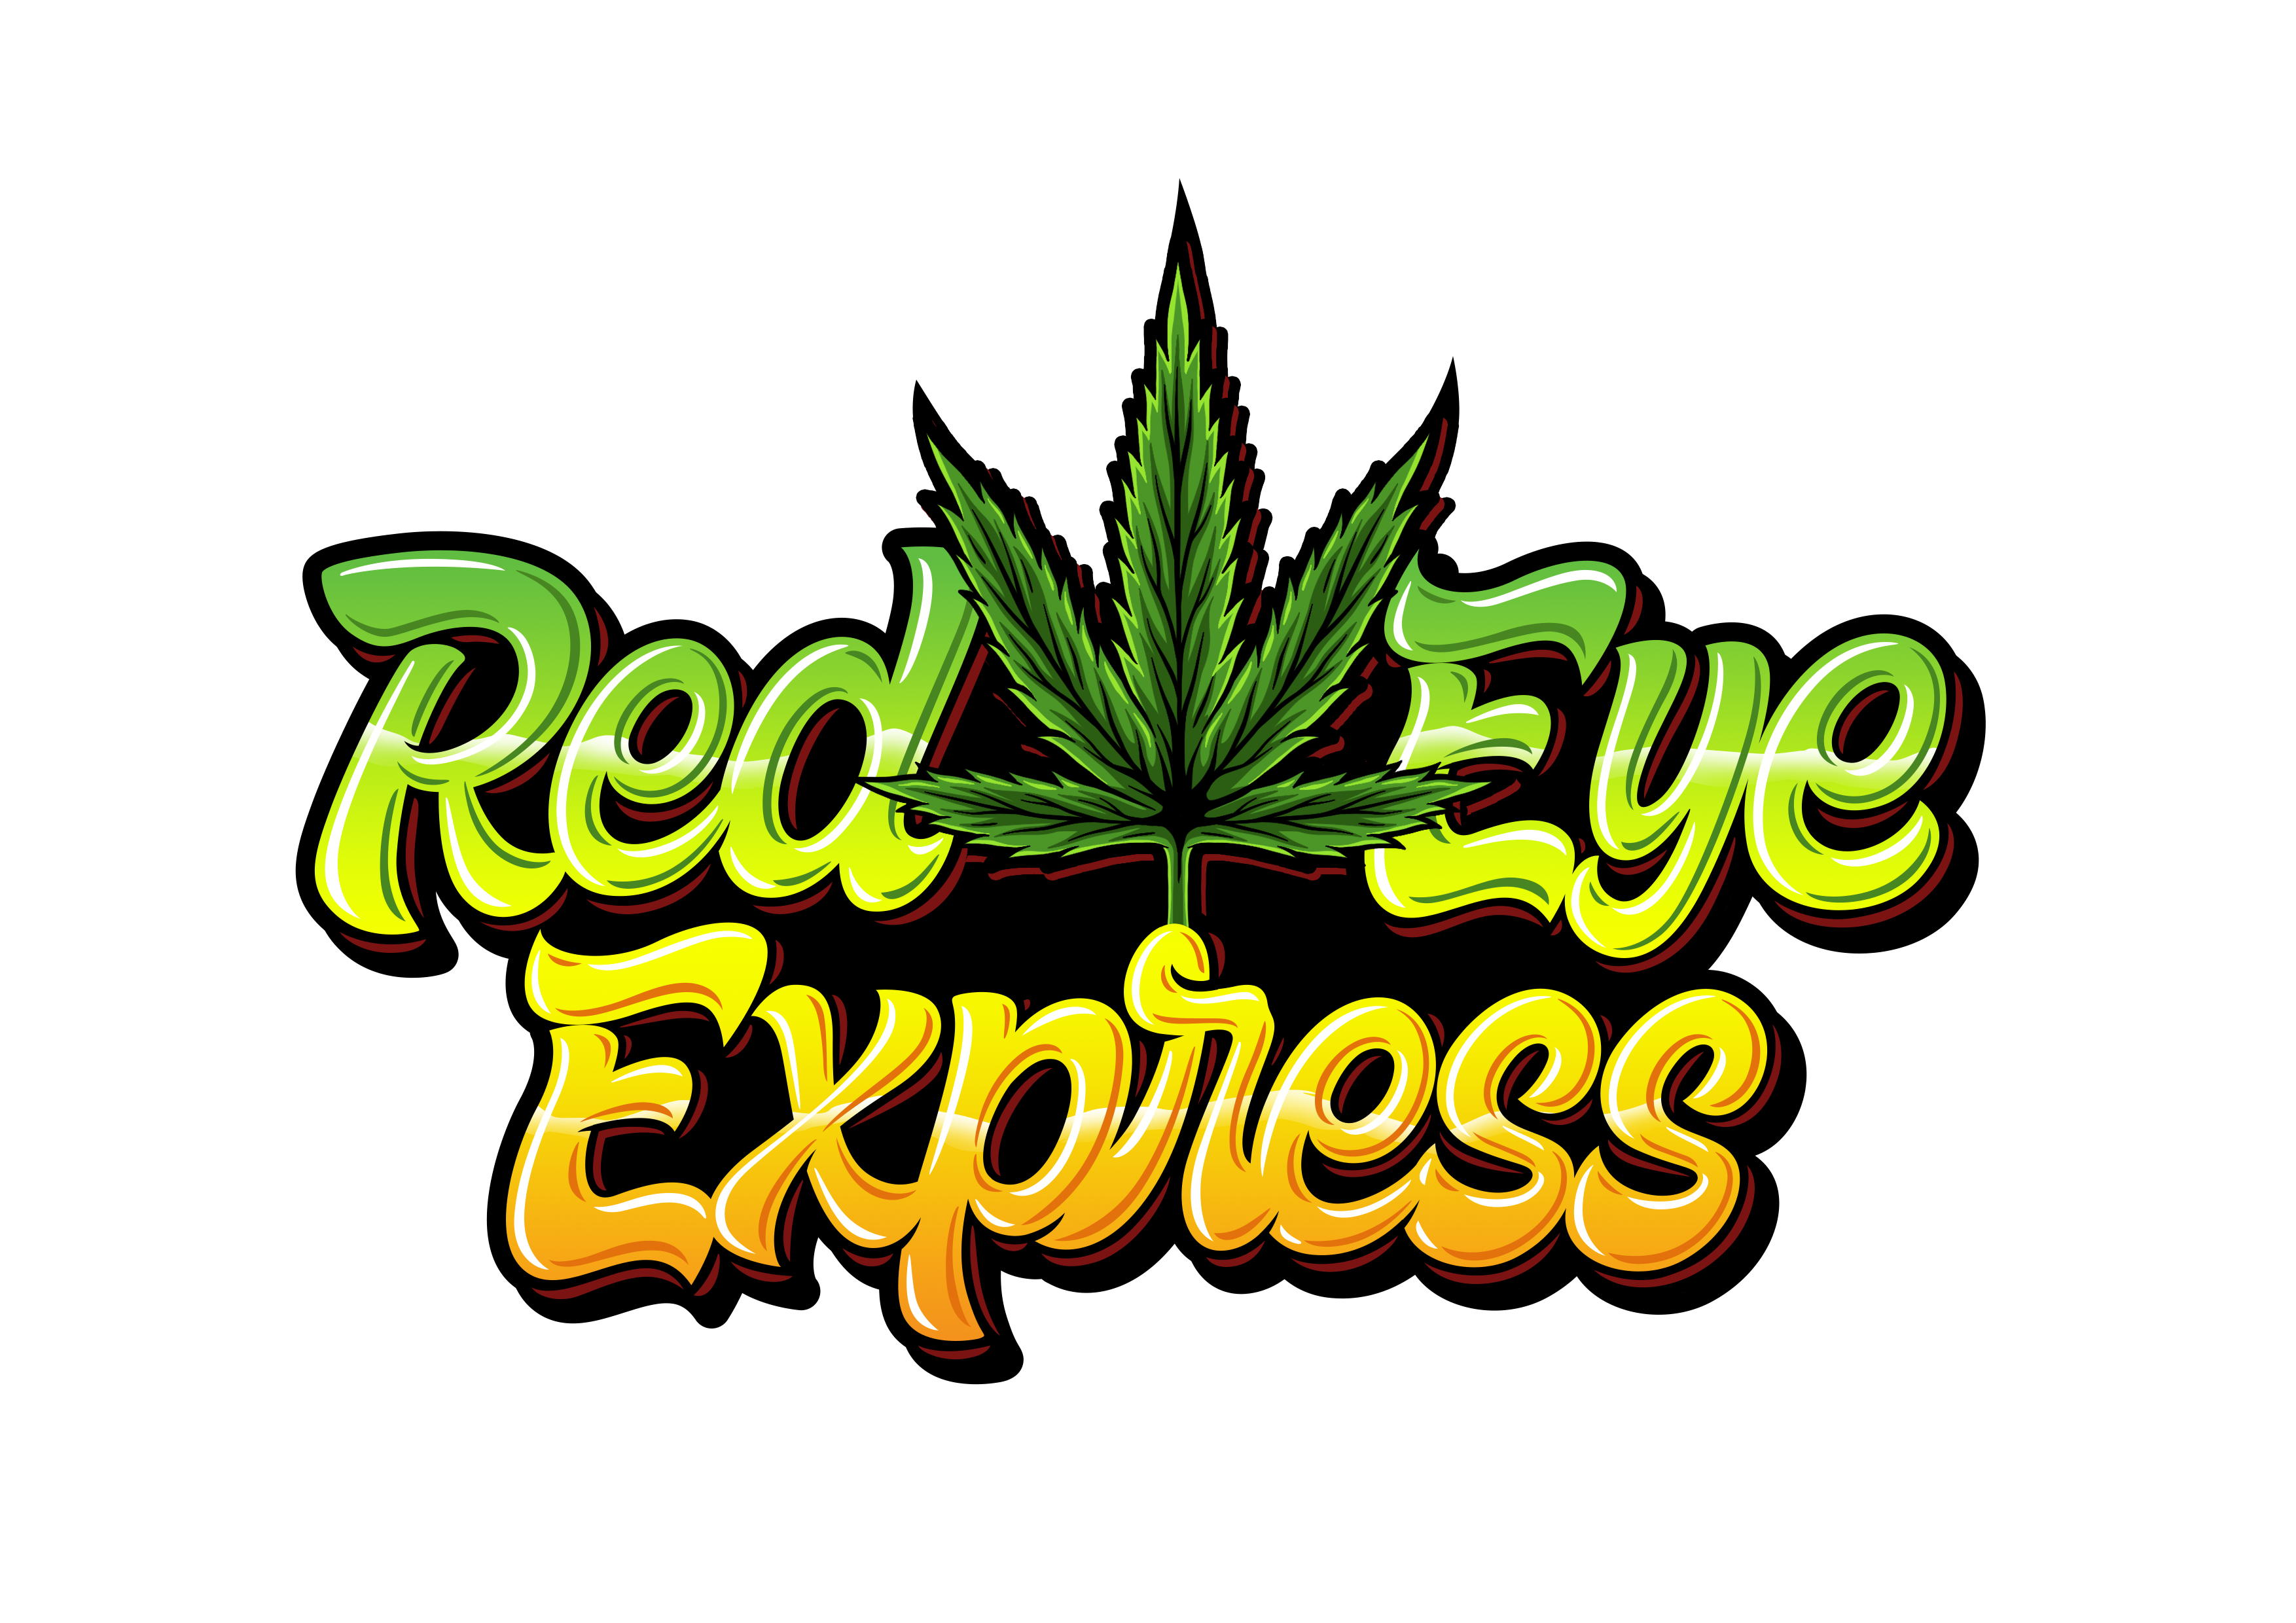 Red Eye Express Rub Seasoning Spice - Dizzy Pig - 8 oz Shaker